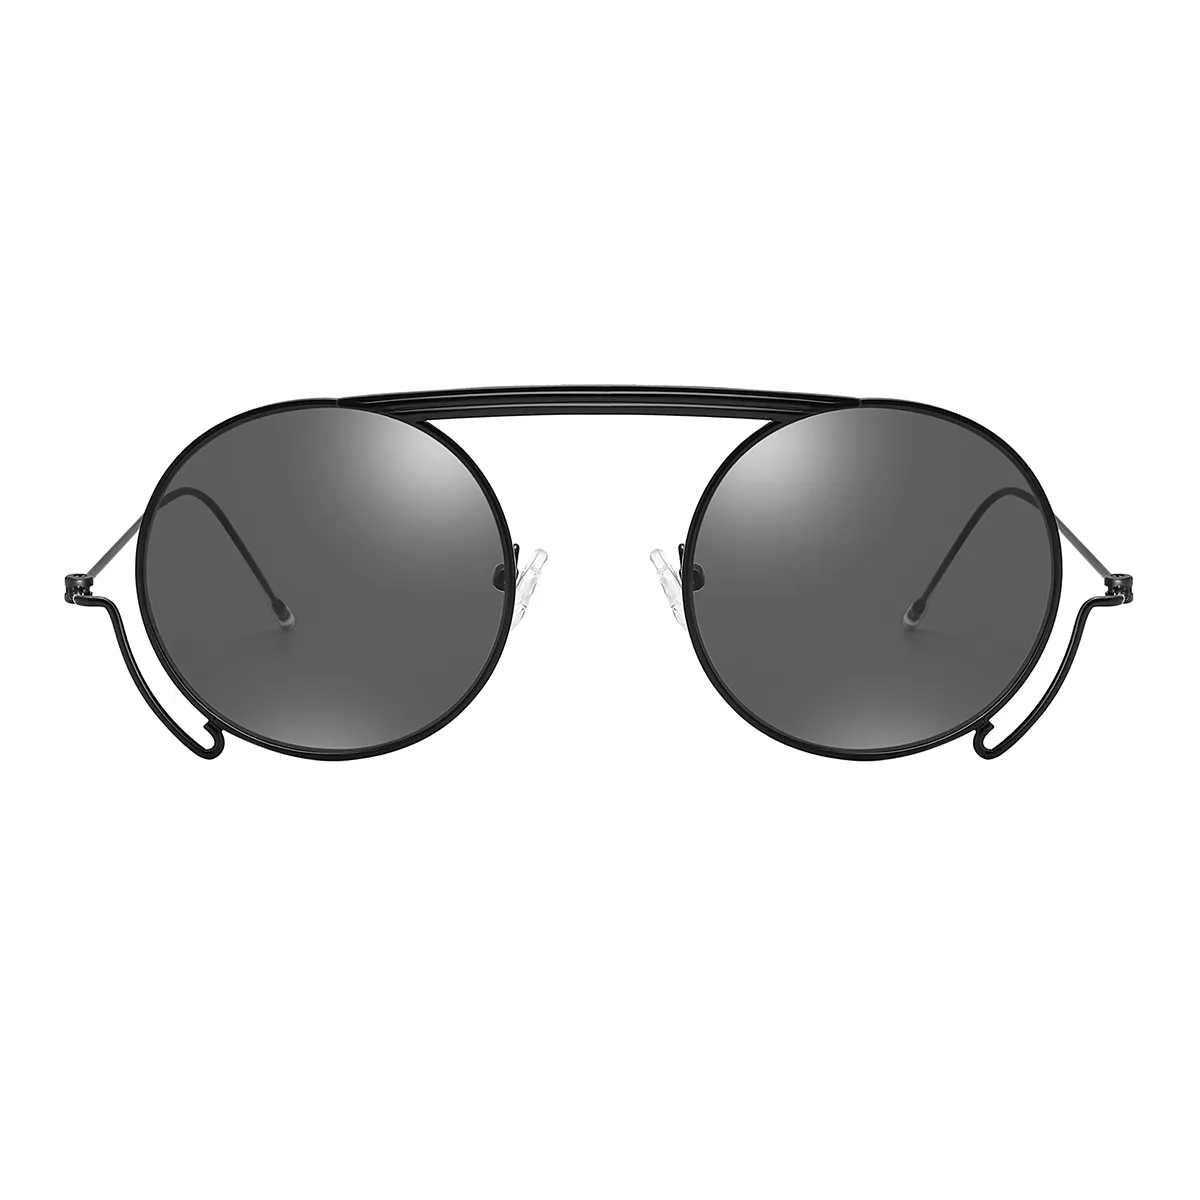 Fashion Round Black  Sunglasses for Women & Men